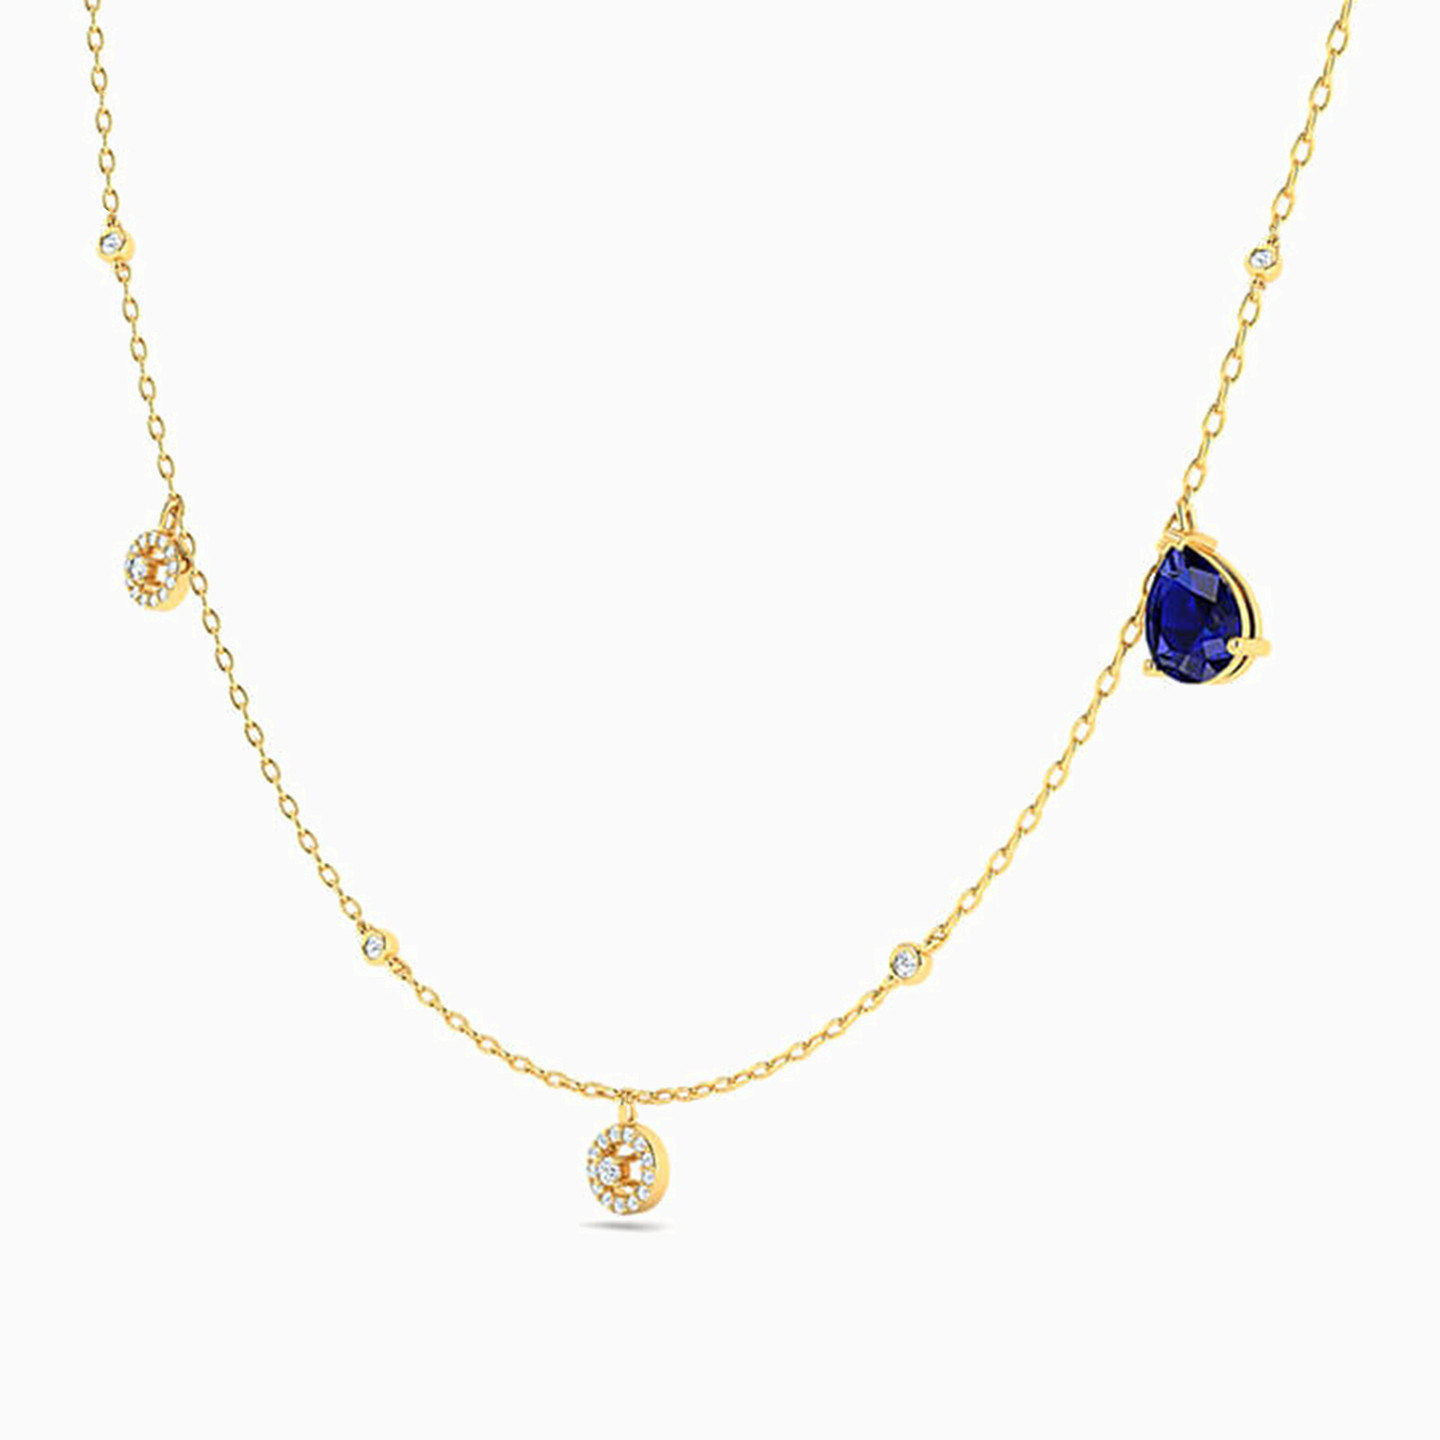 18K Gold Diamond & Colored Stones Chain Necklace - 2